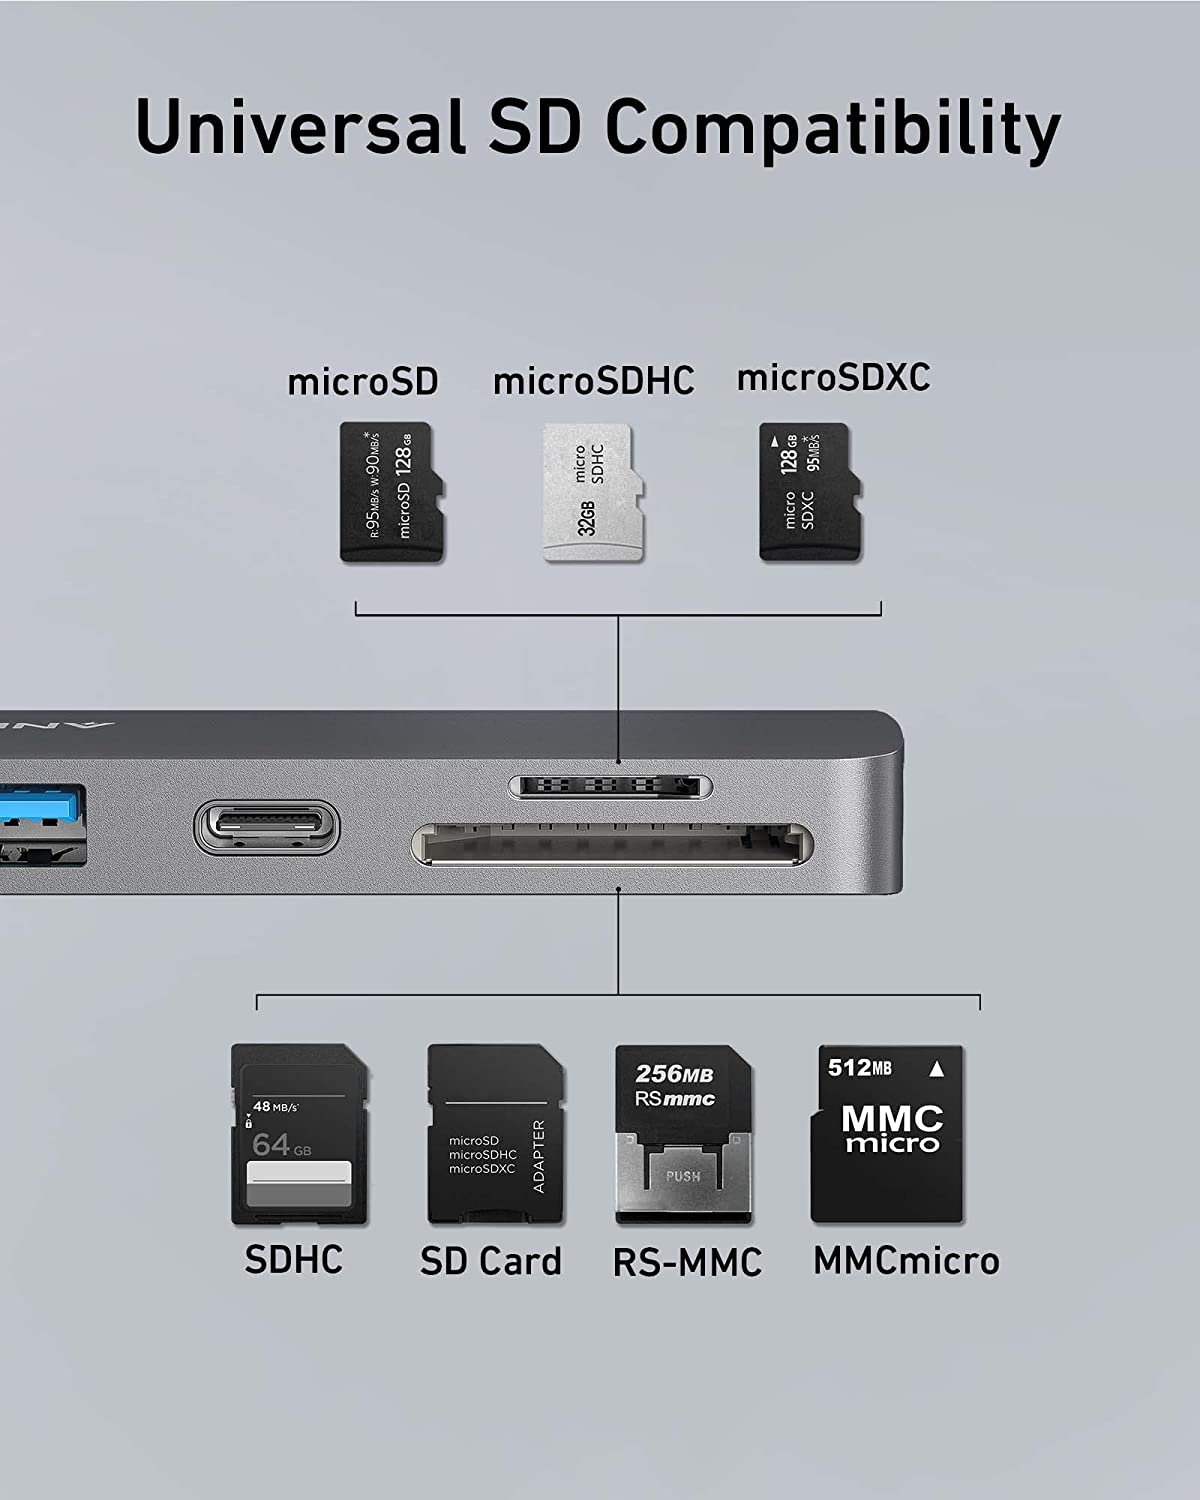 PowerExpand Direct 7-in-2 USB-C PD Media Hub